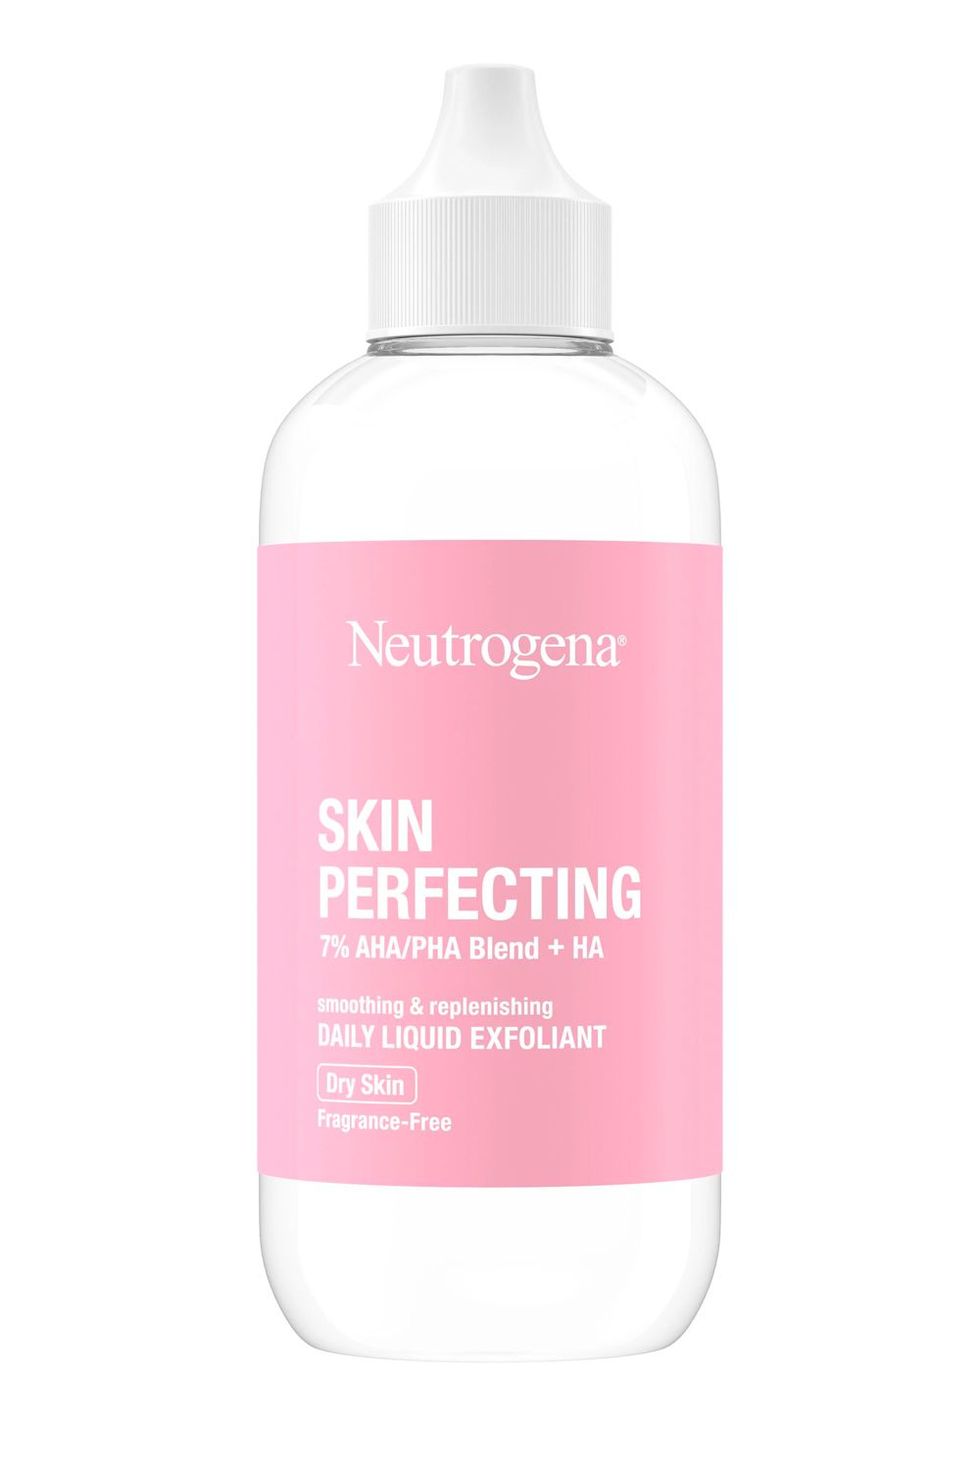 Neutrogena Skin Perfecting Daily Liquid Facial Exfoliant 